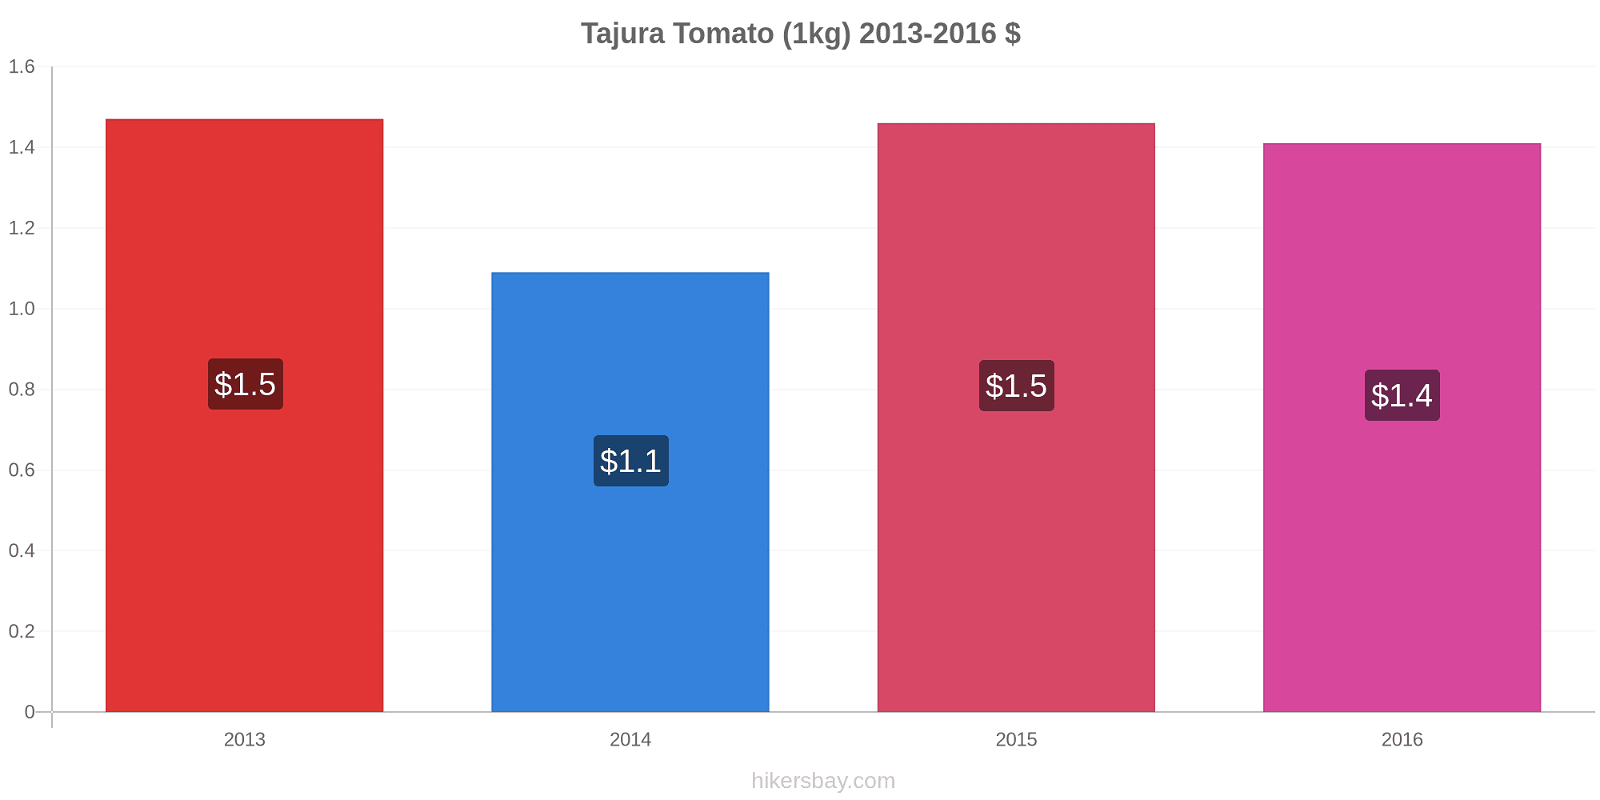 Tajura price changes Tomato (1kg) hikersbay.com